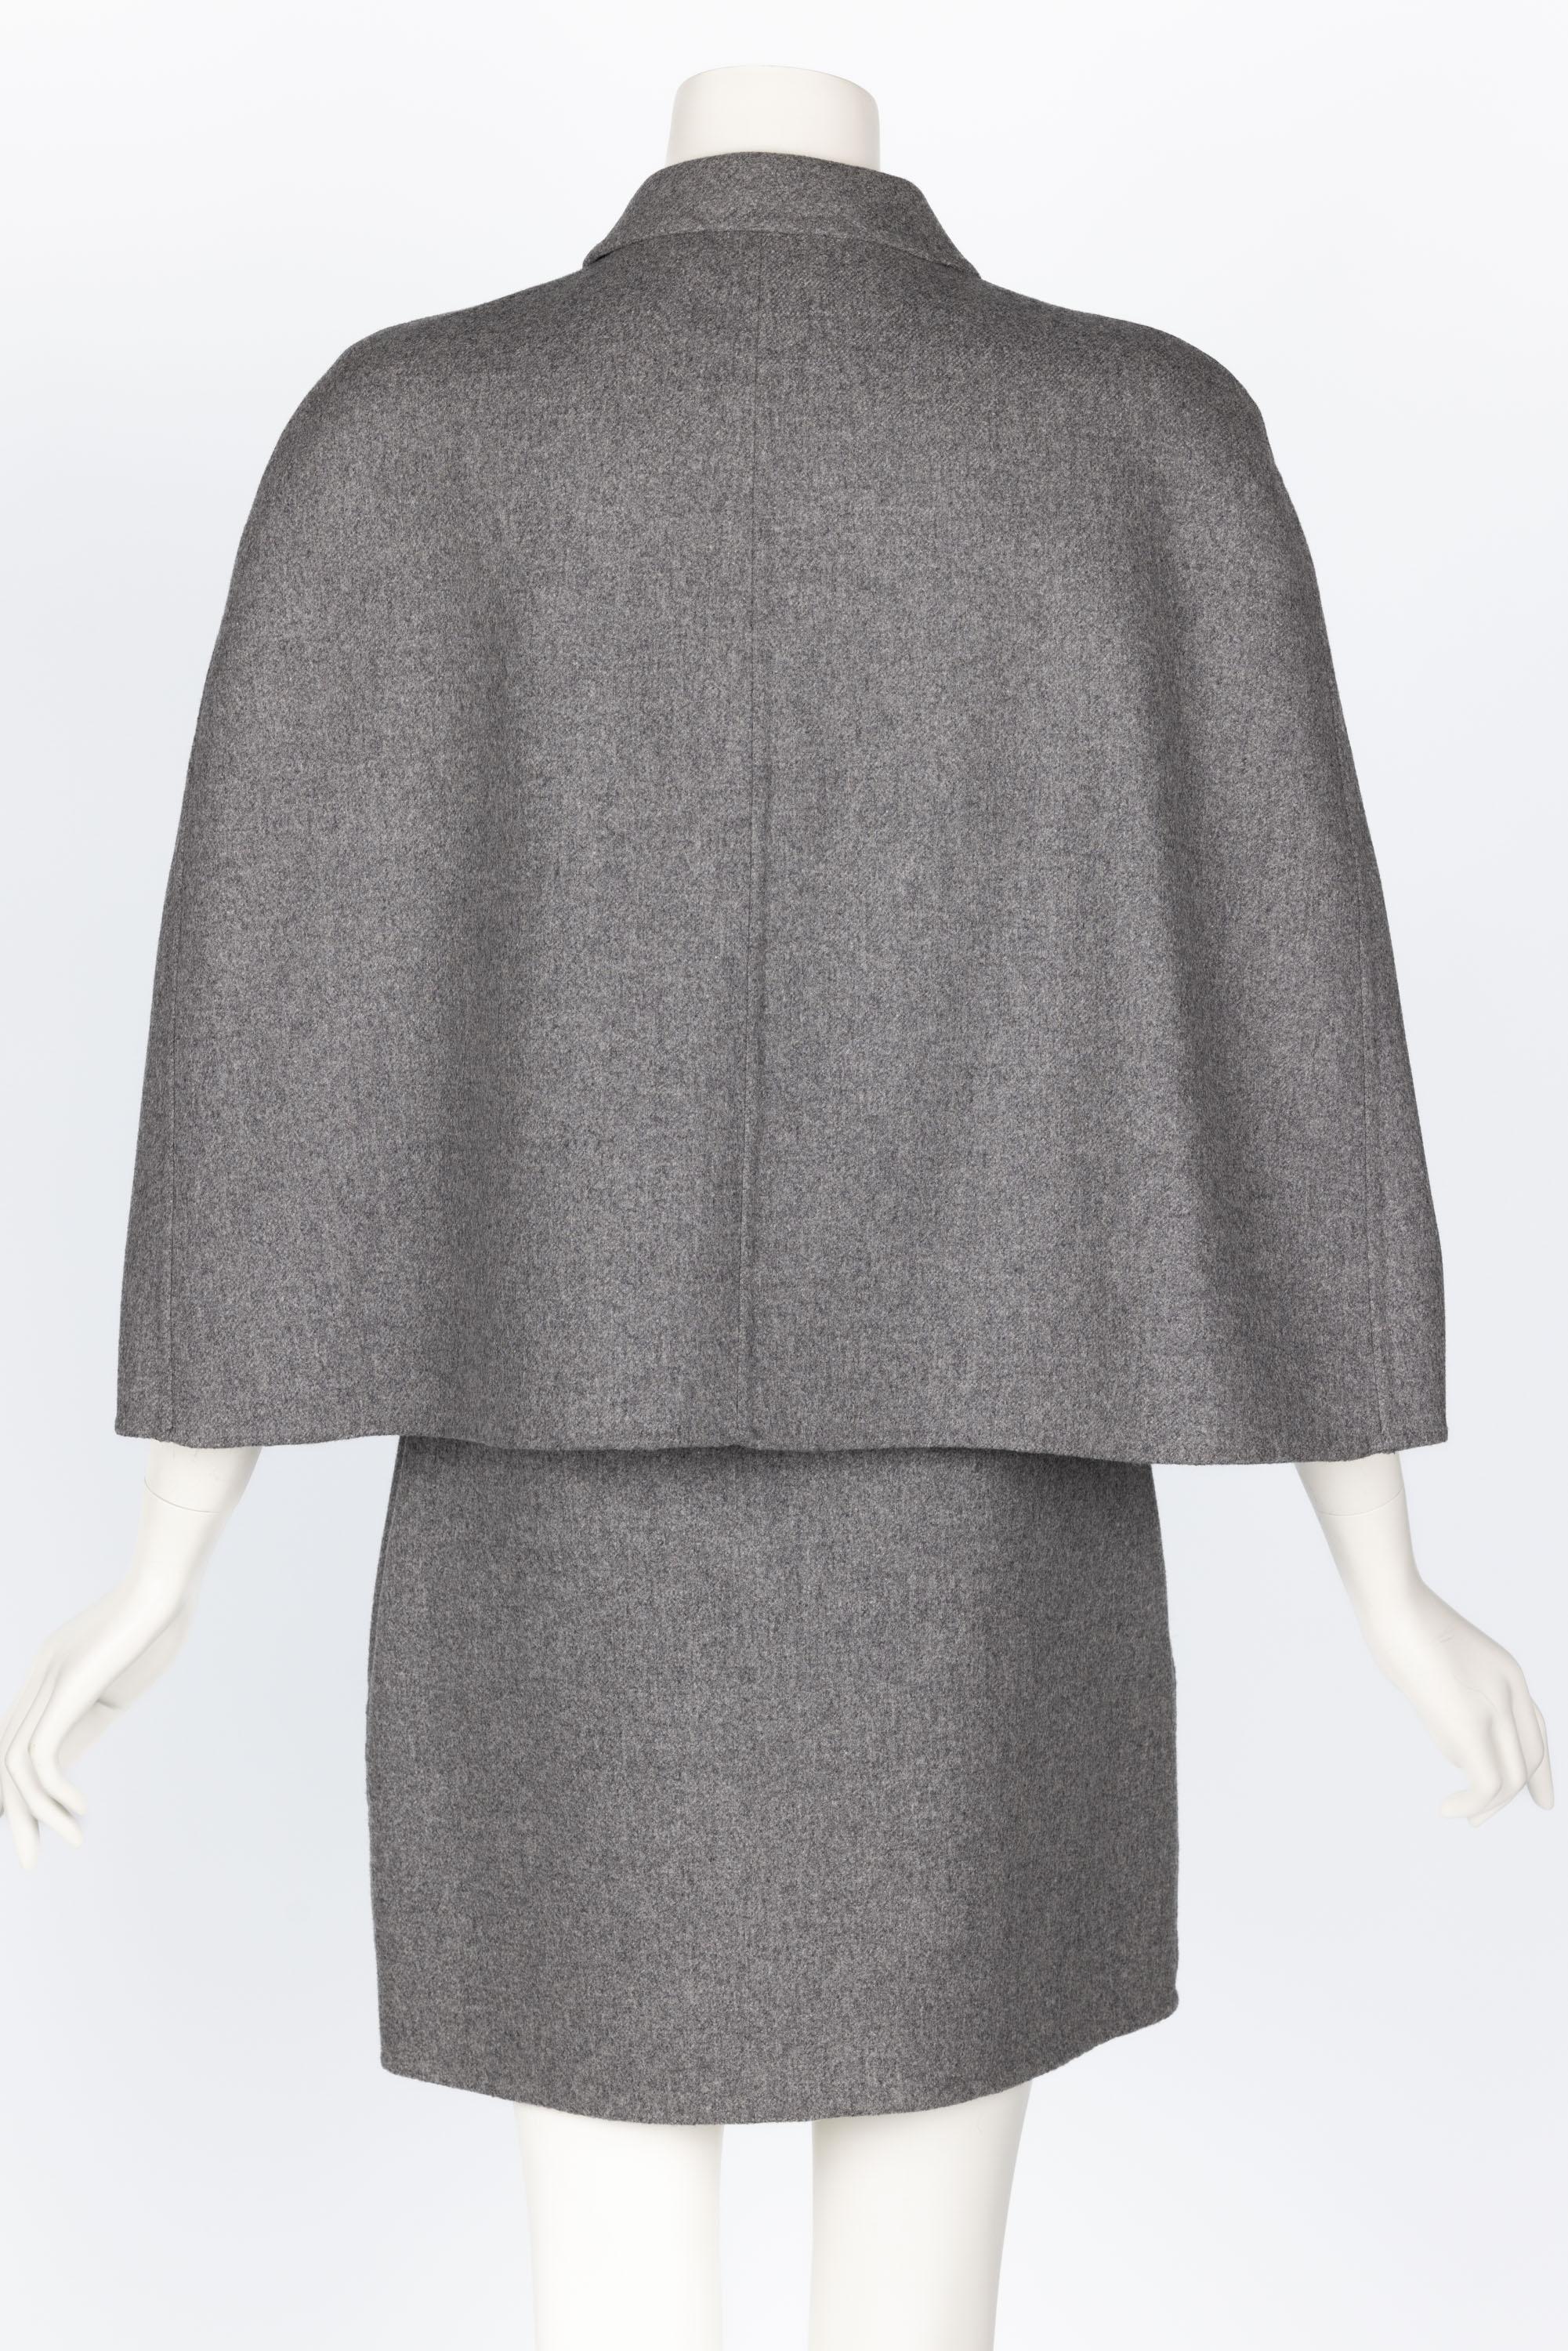 Valentino Grey Wool Angora Cape Mini Skirt Suit Set For Sale 2